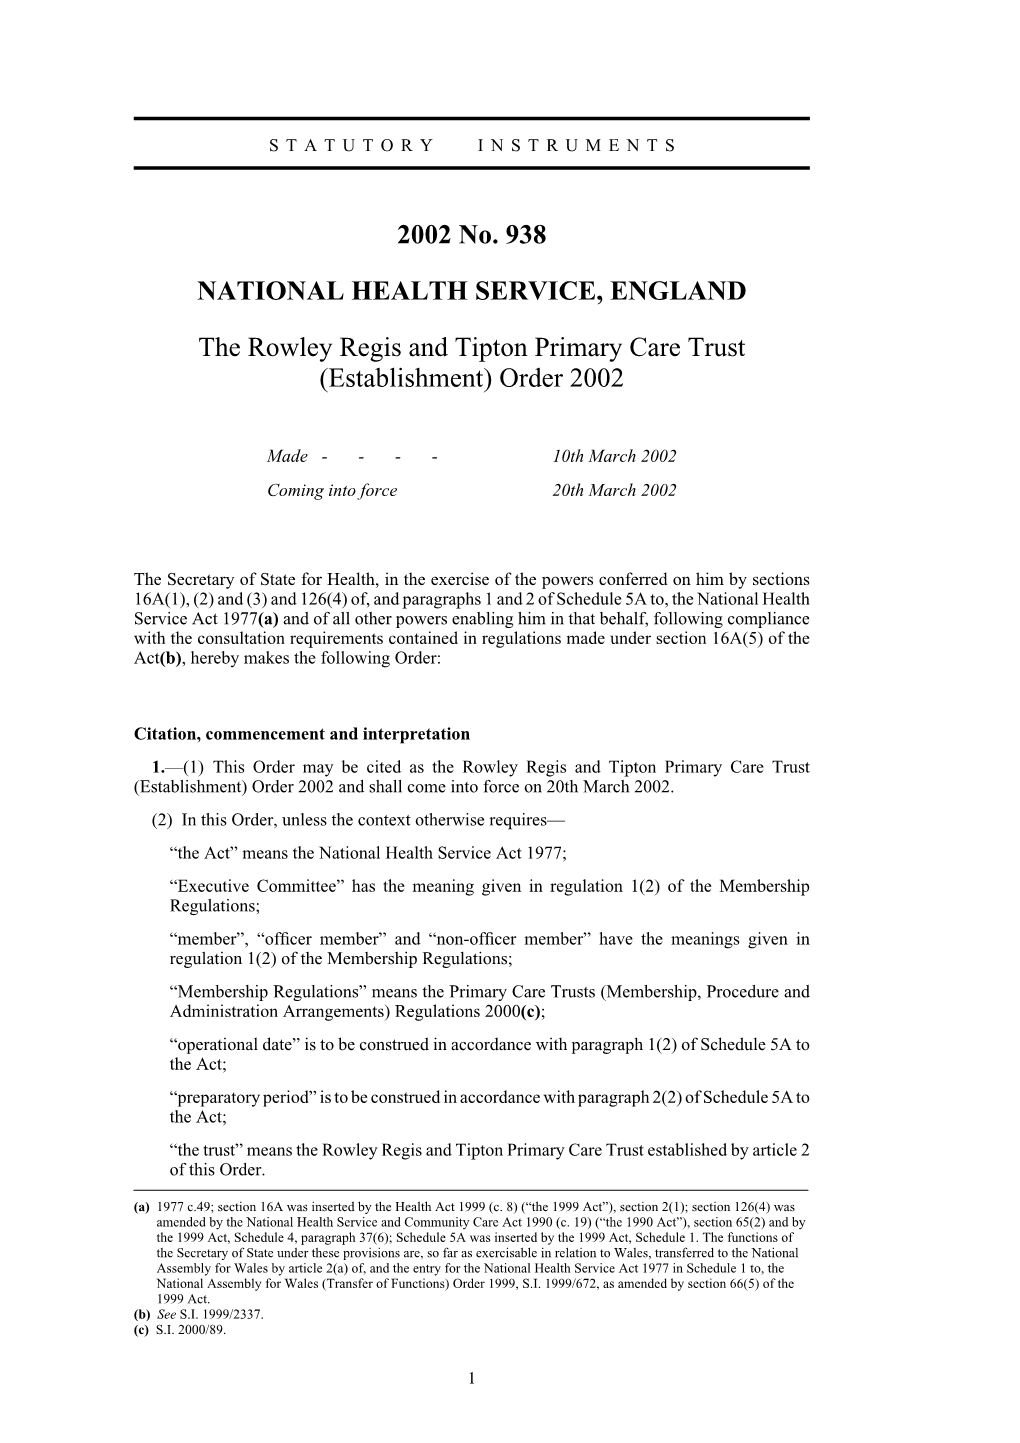 2002 No. 938 NATIONAL HEALTH SERVICE, ENGLAND the Rowley